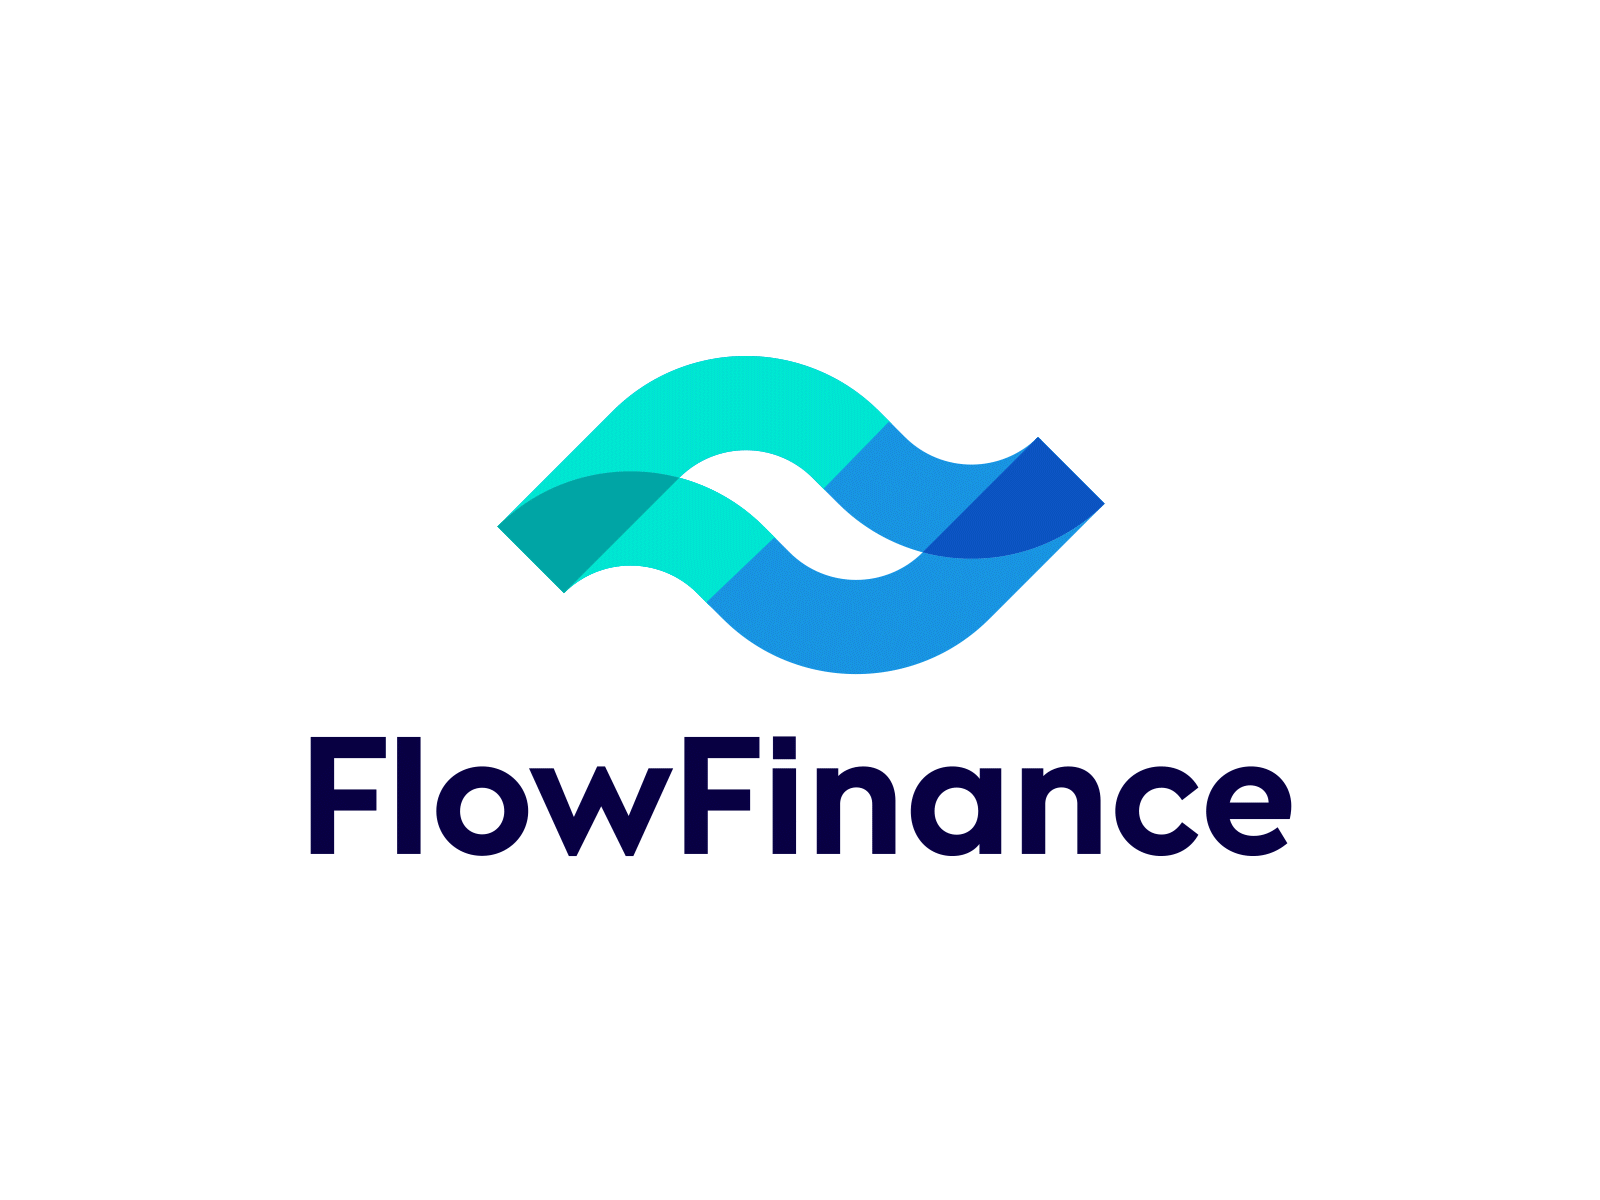 Flow Finance logo animation